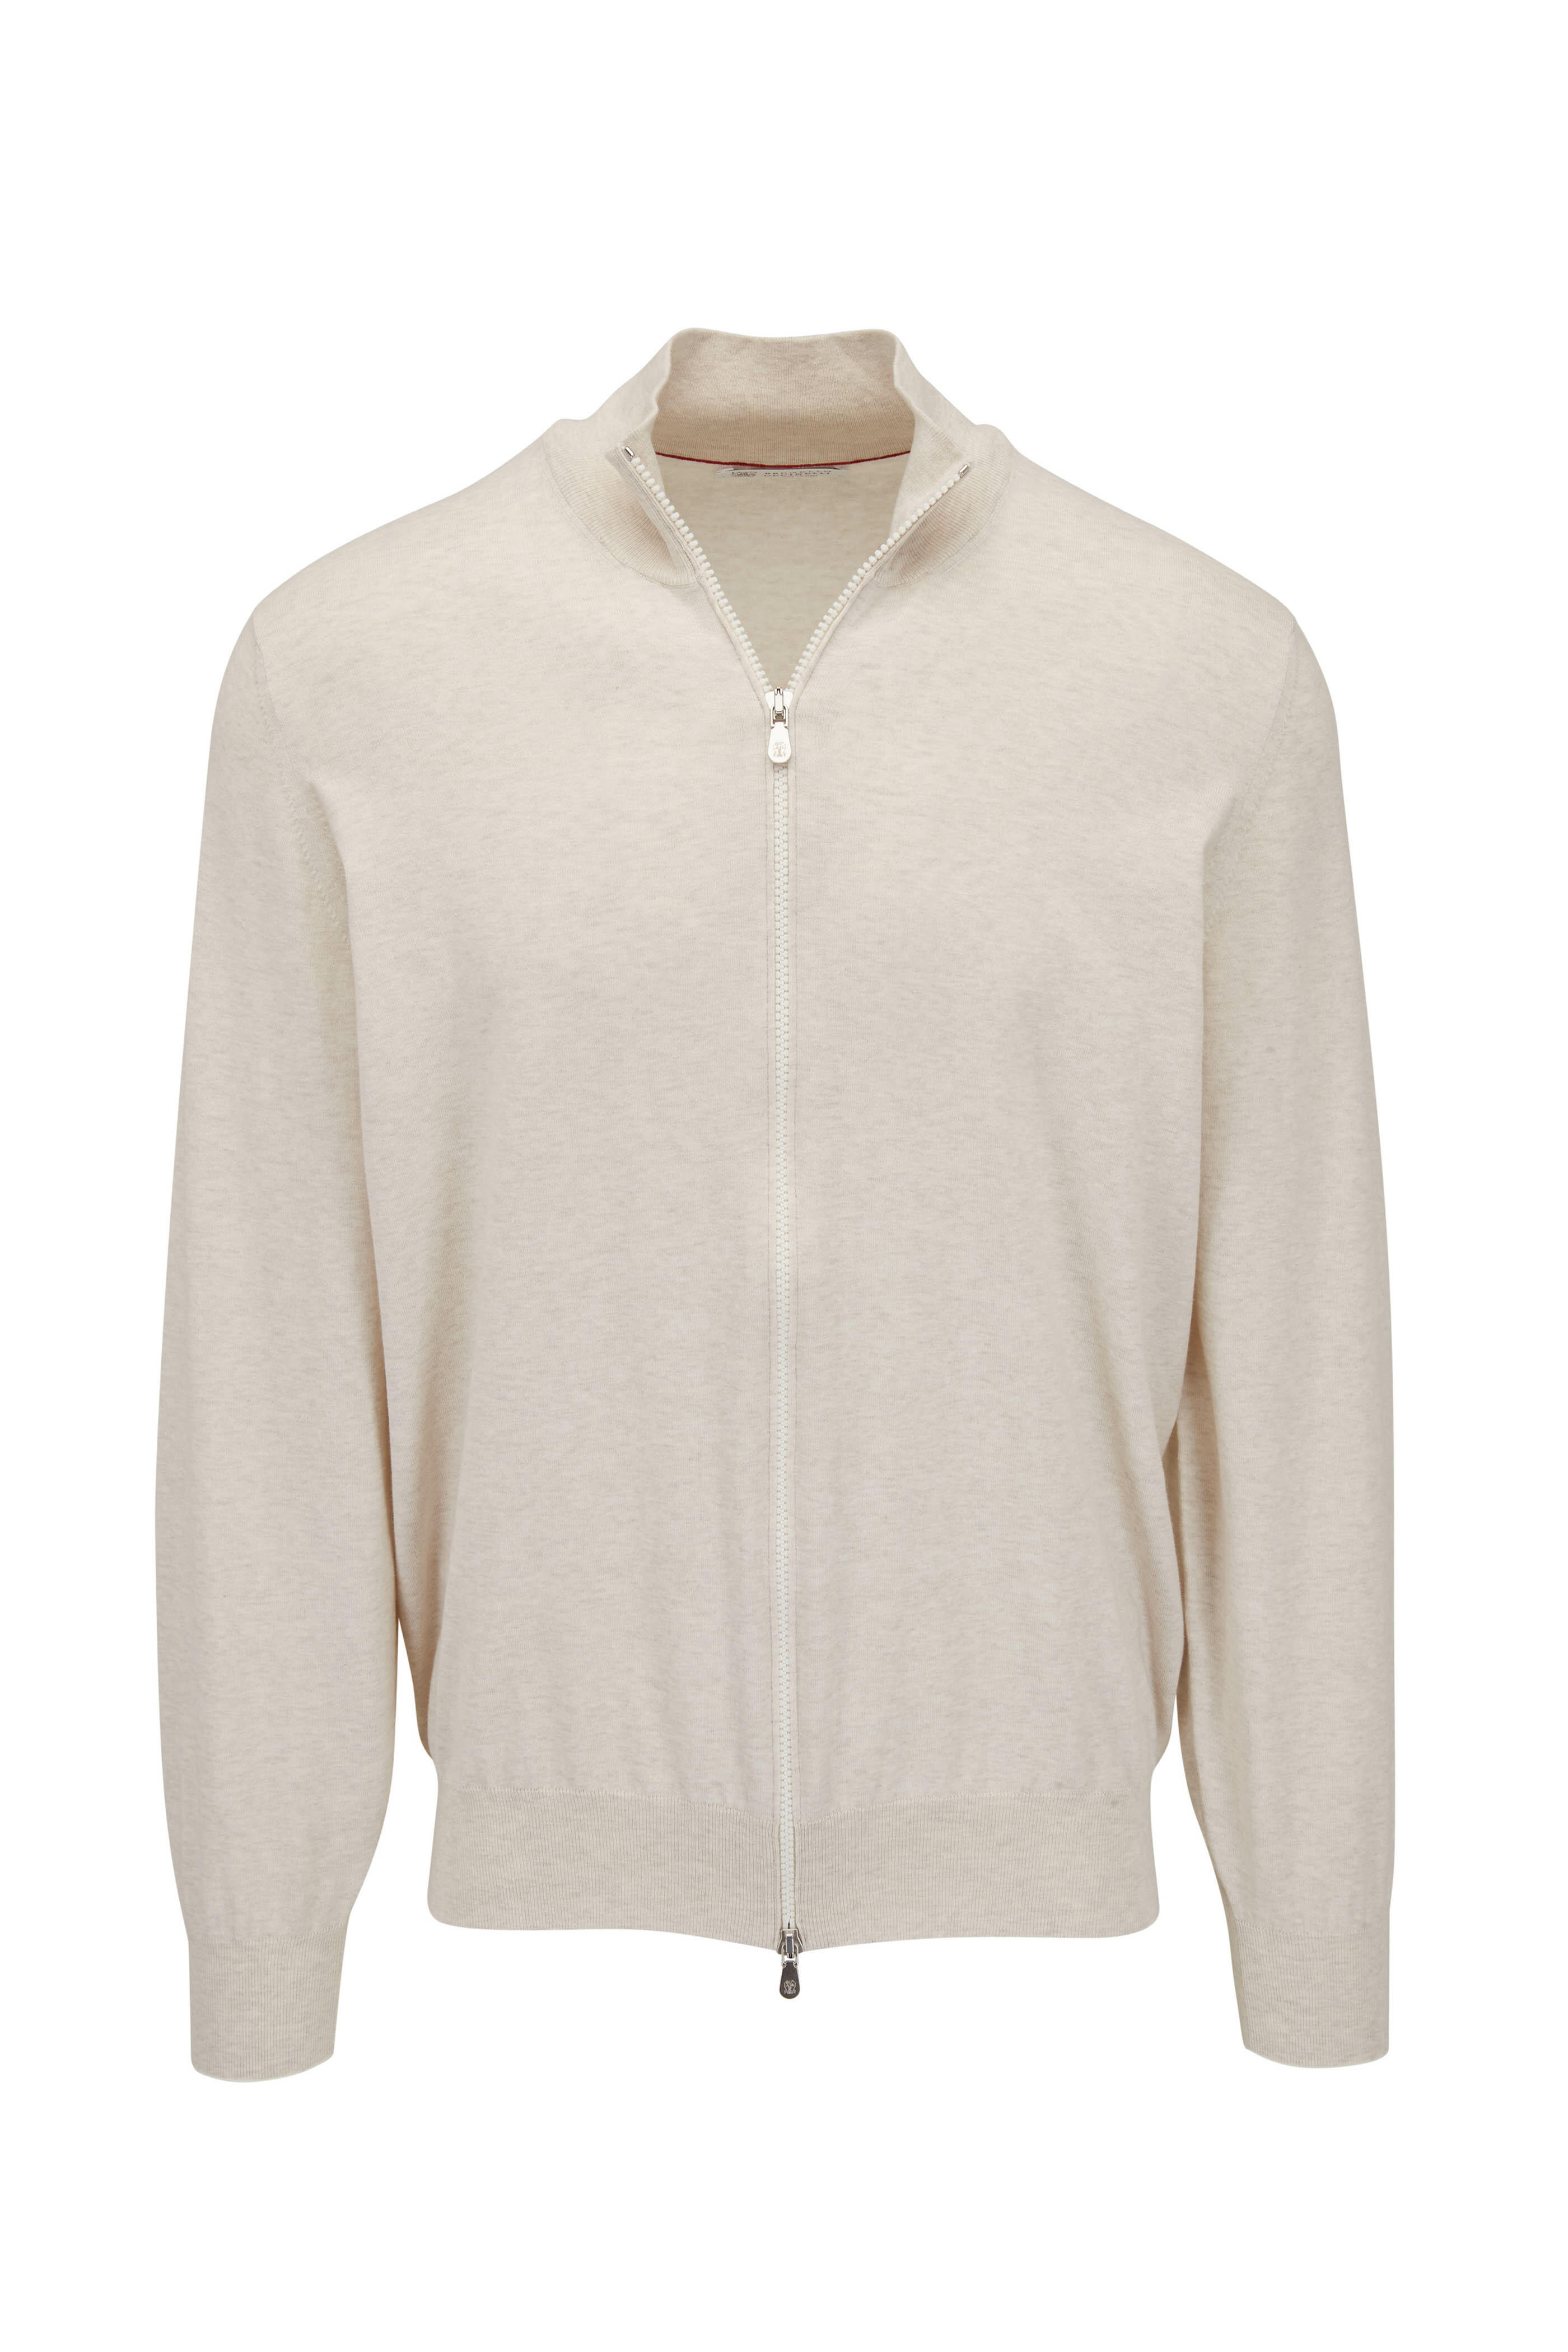 Brunello Cucinelli - Oat Cotton Full Zip Sweater